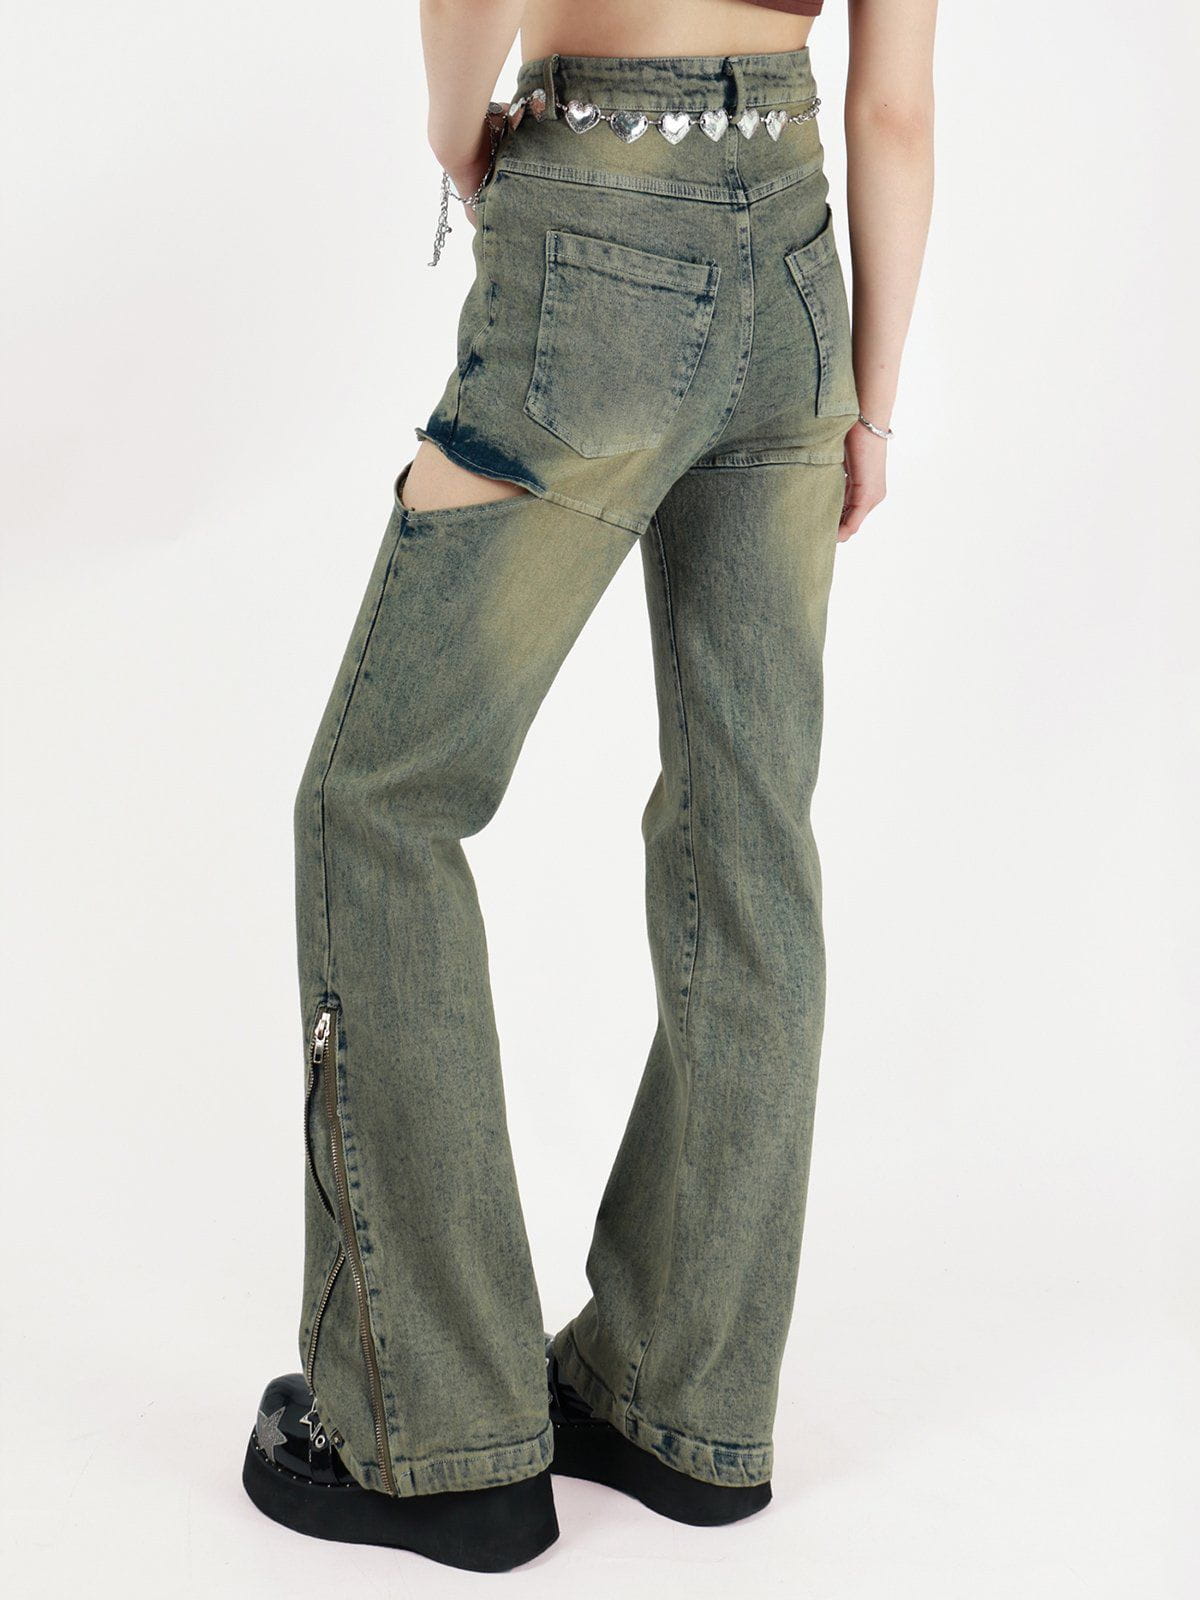 Vintage Distressed Cut Jeans